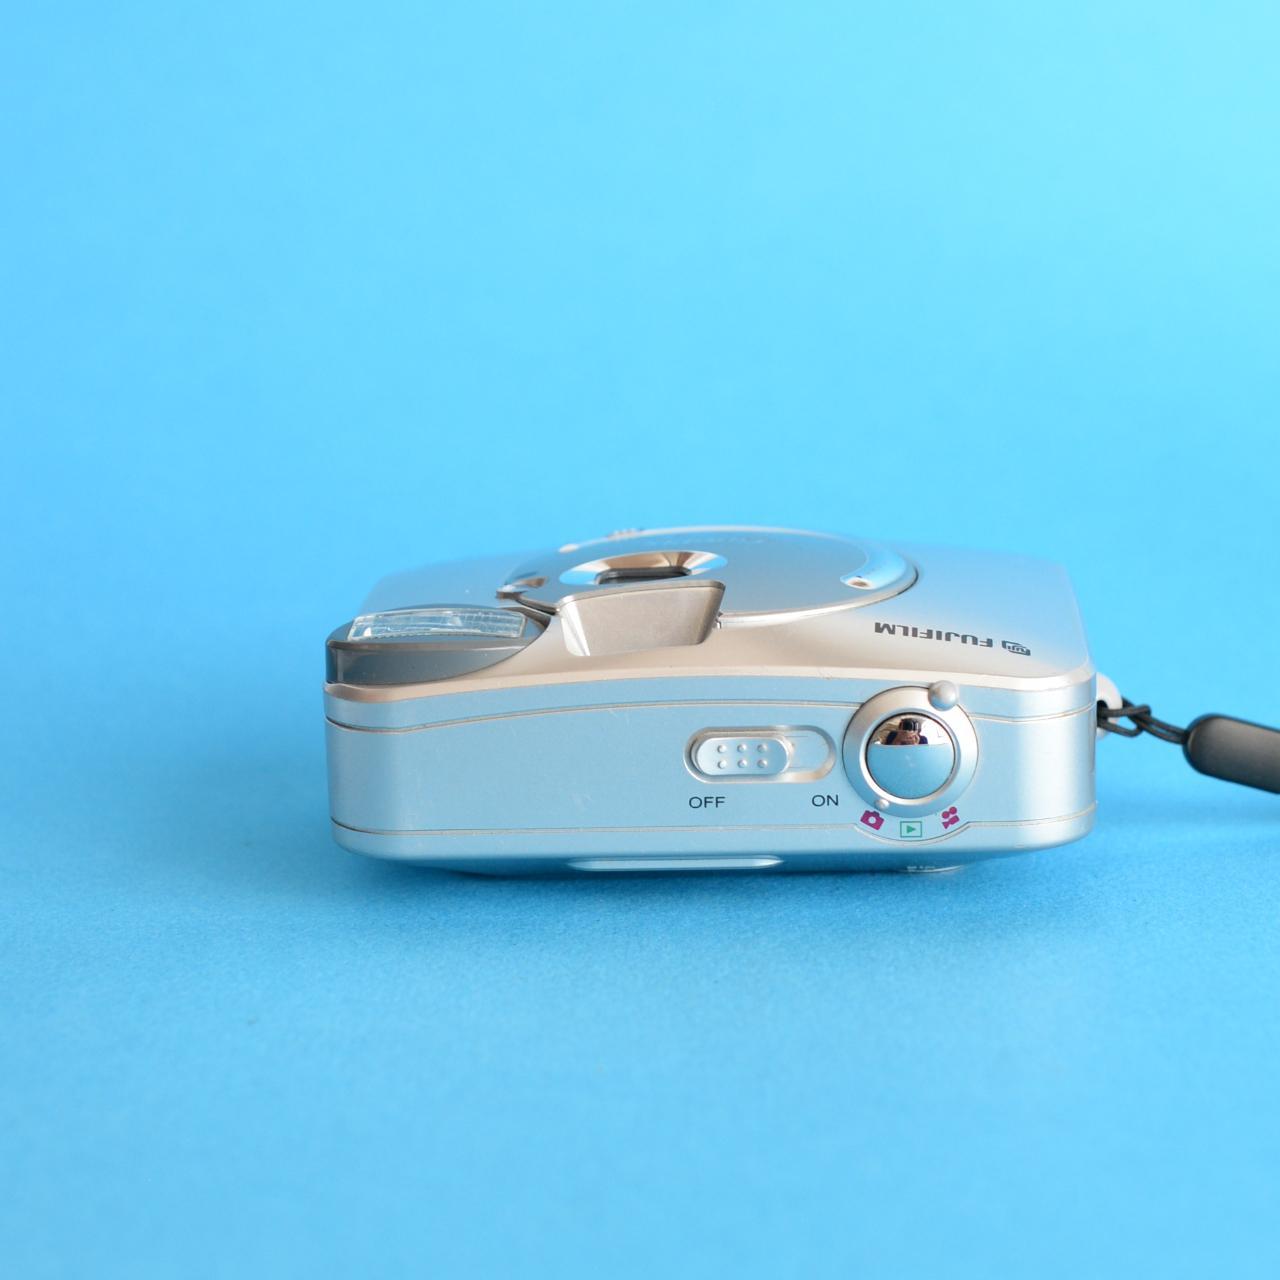 Fujifilm FinePix A201 | 2MP Digital camera | Silver